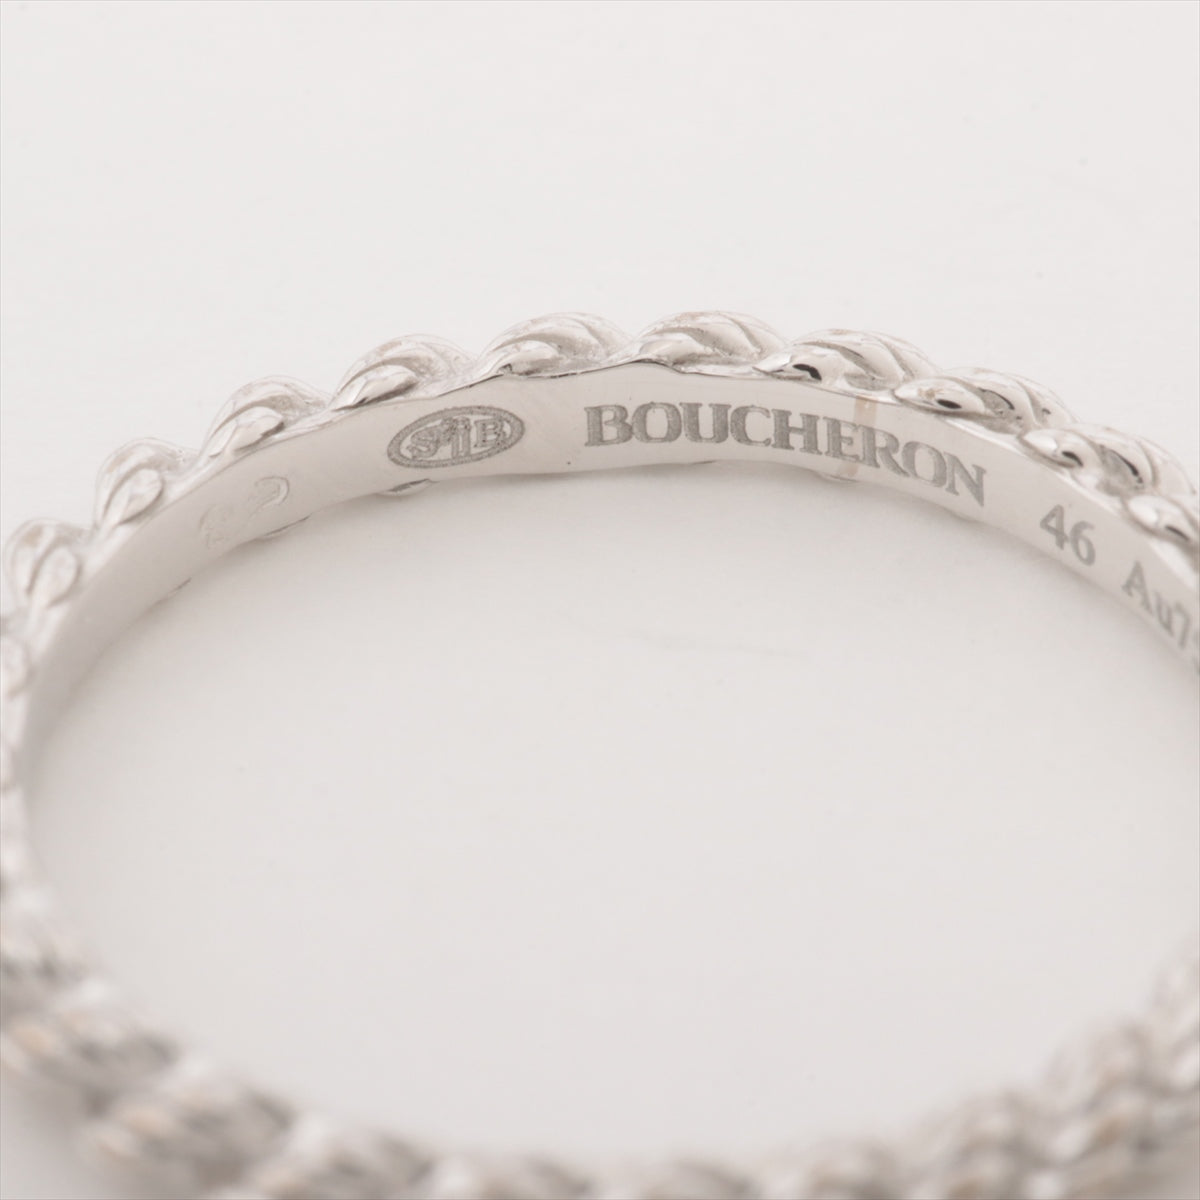 Boucheron Serpent Bohème rings 750(WG) 1.4g 46 JAL0024046